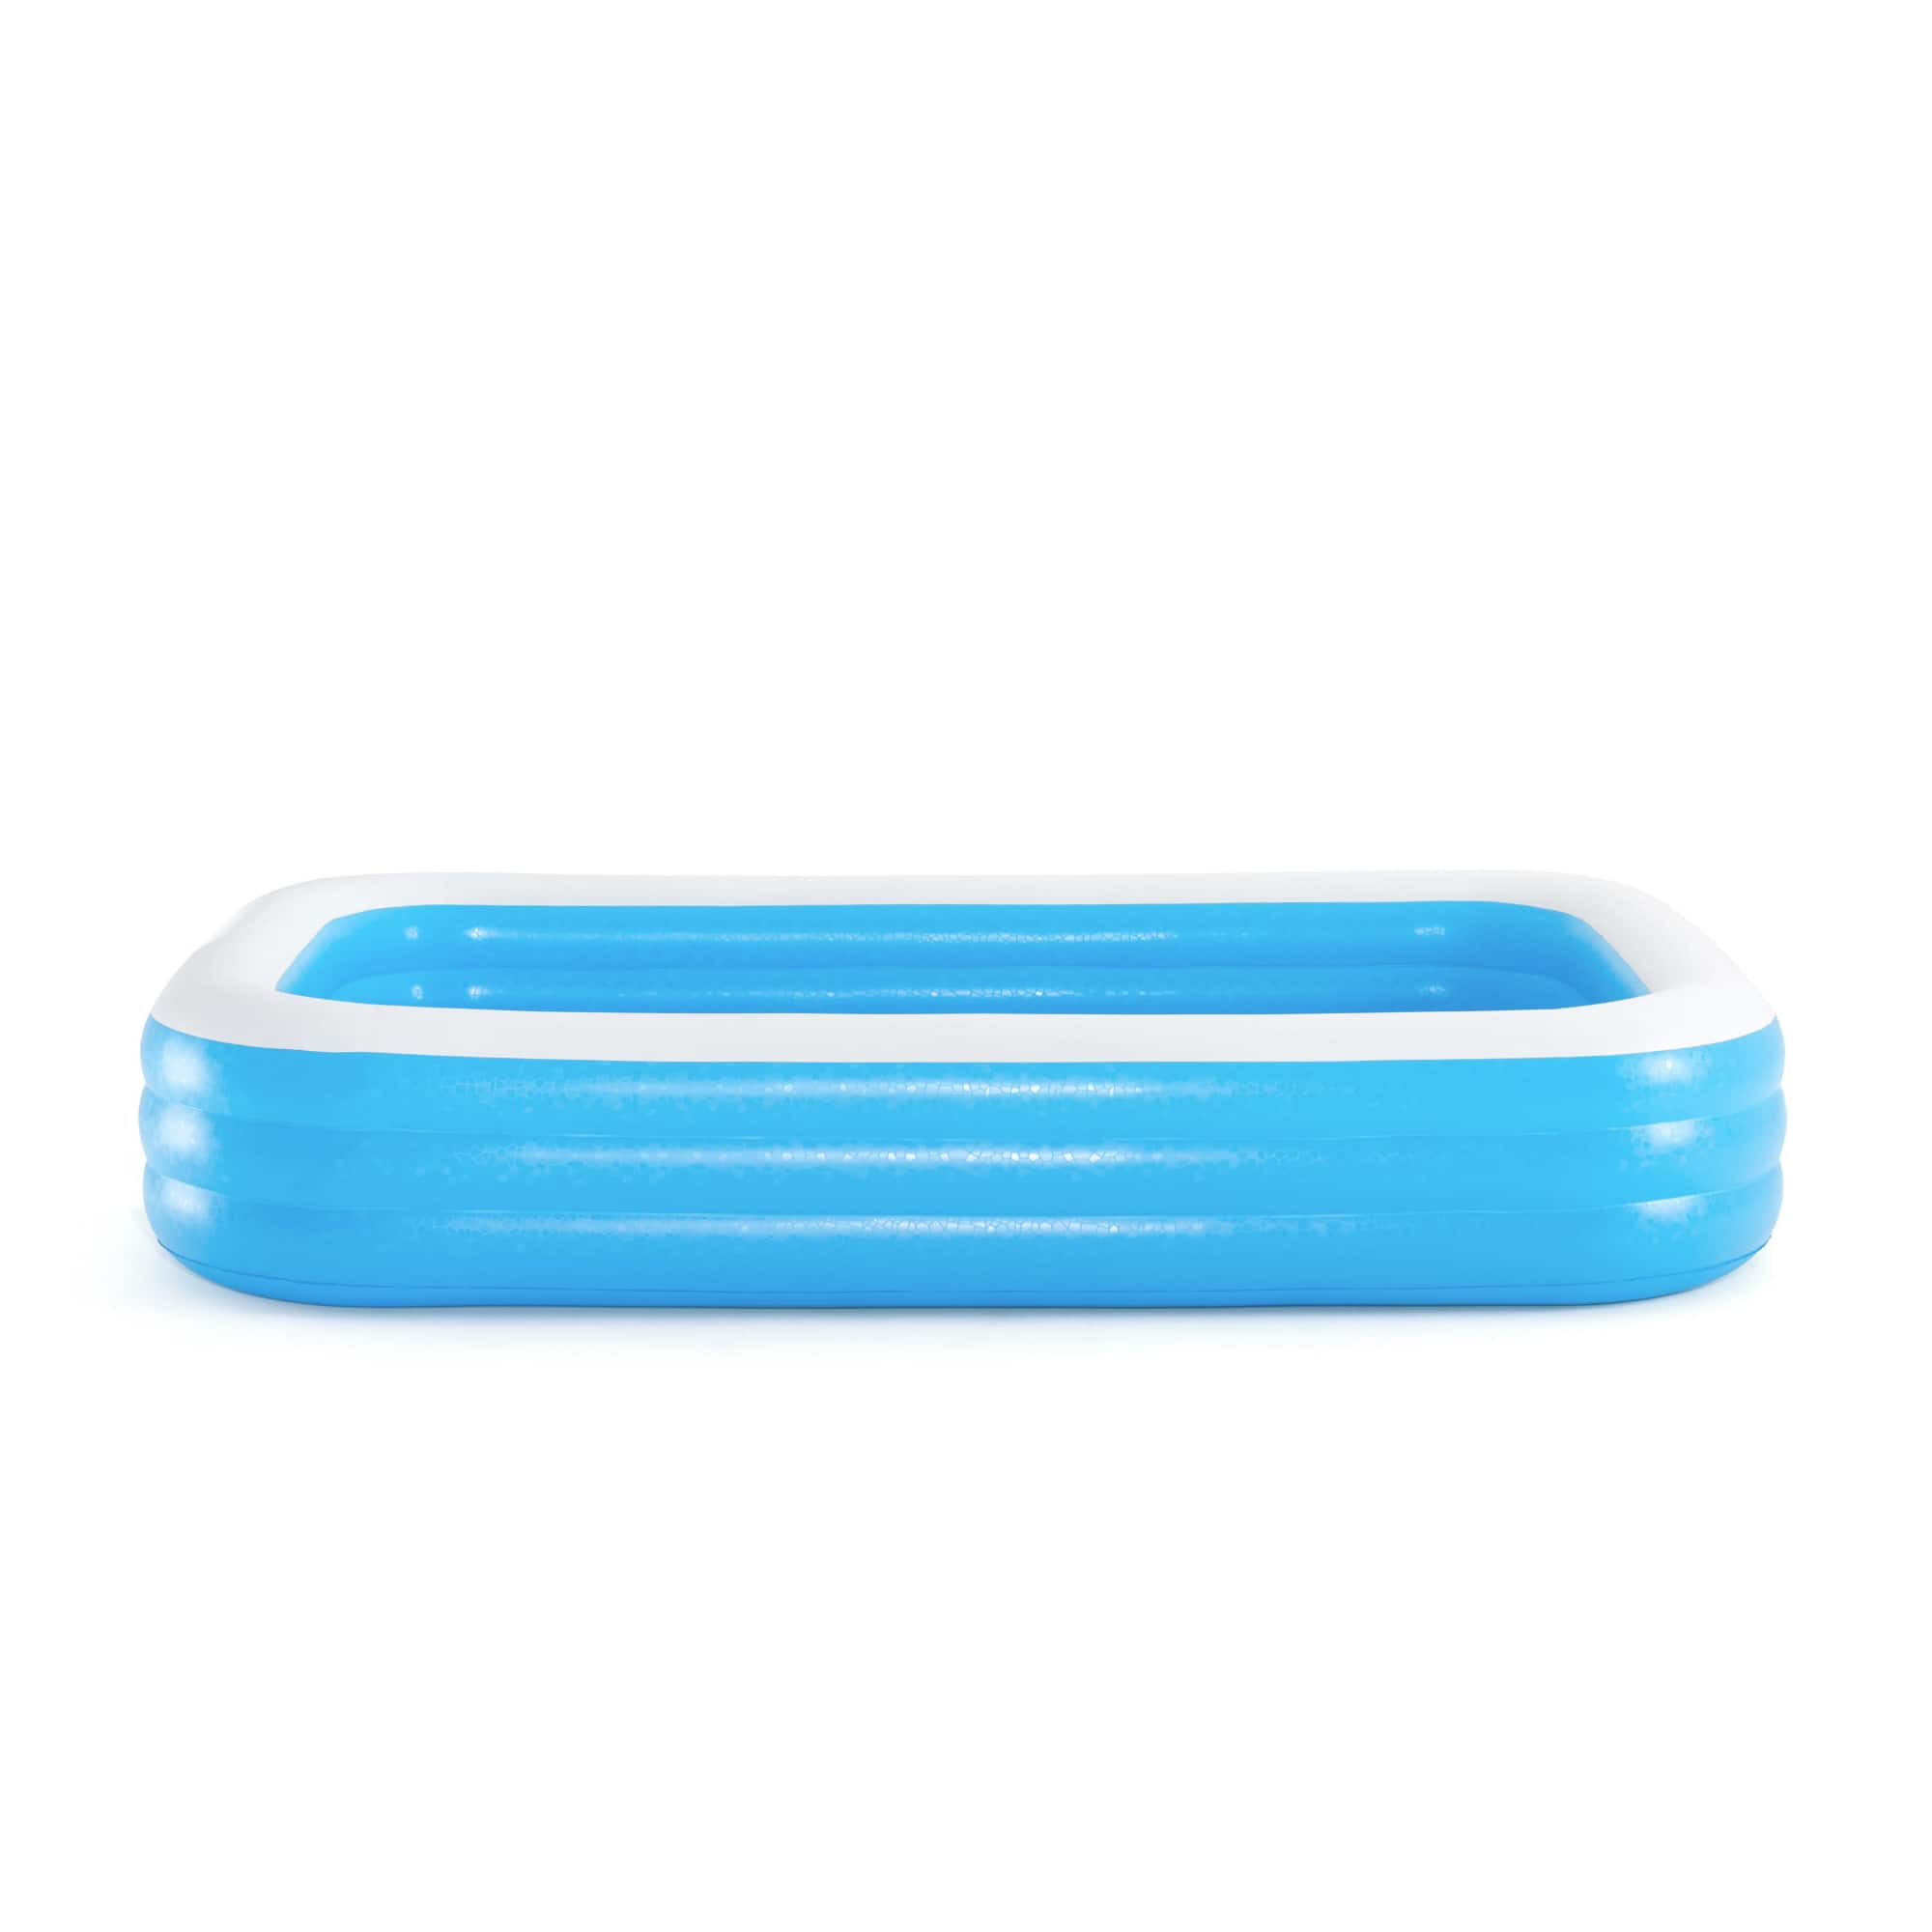 Bestway&#xAE; H2OGO!&#xAE; 10ft. Blue Rectangular Inflatable Family Pool